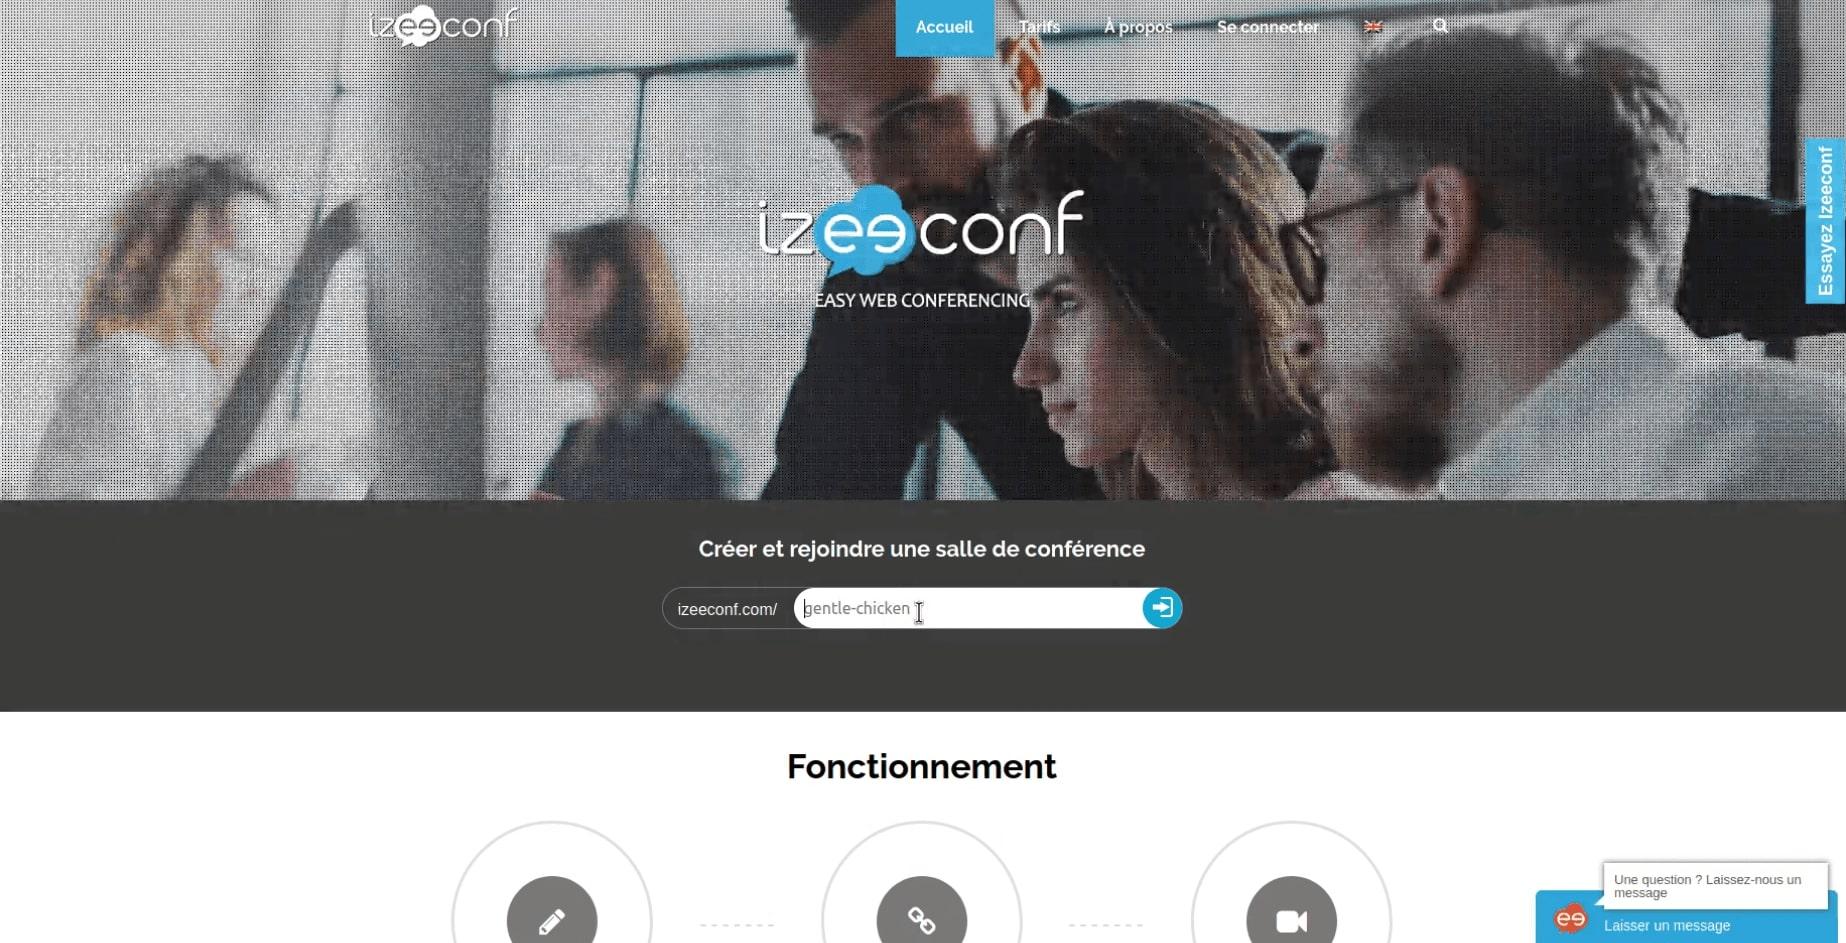 Izeeconf - Conference creation